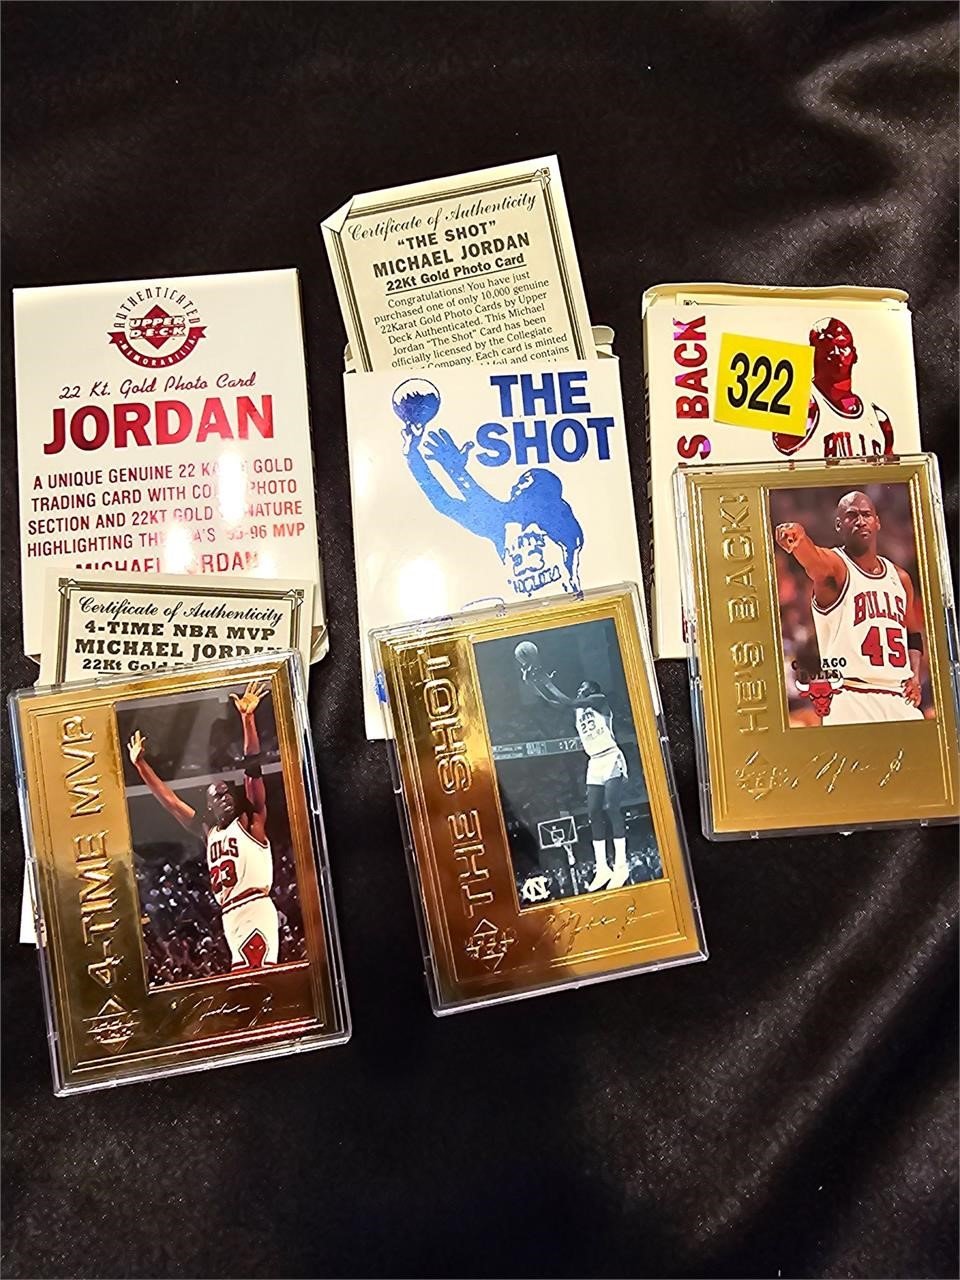 JORDON  22Kt. Gold Trading cards LTD.